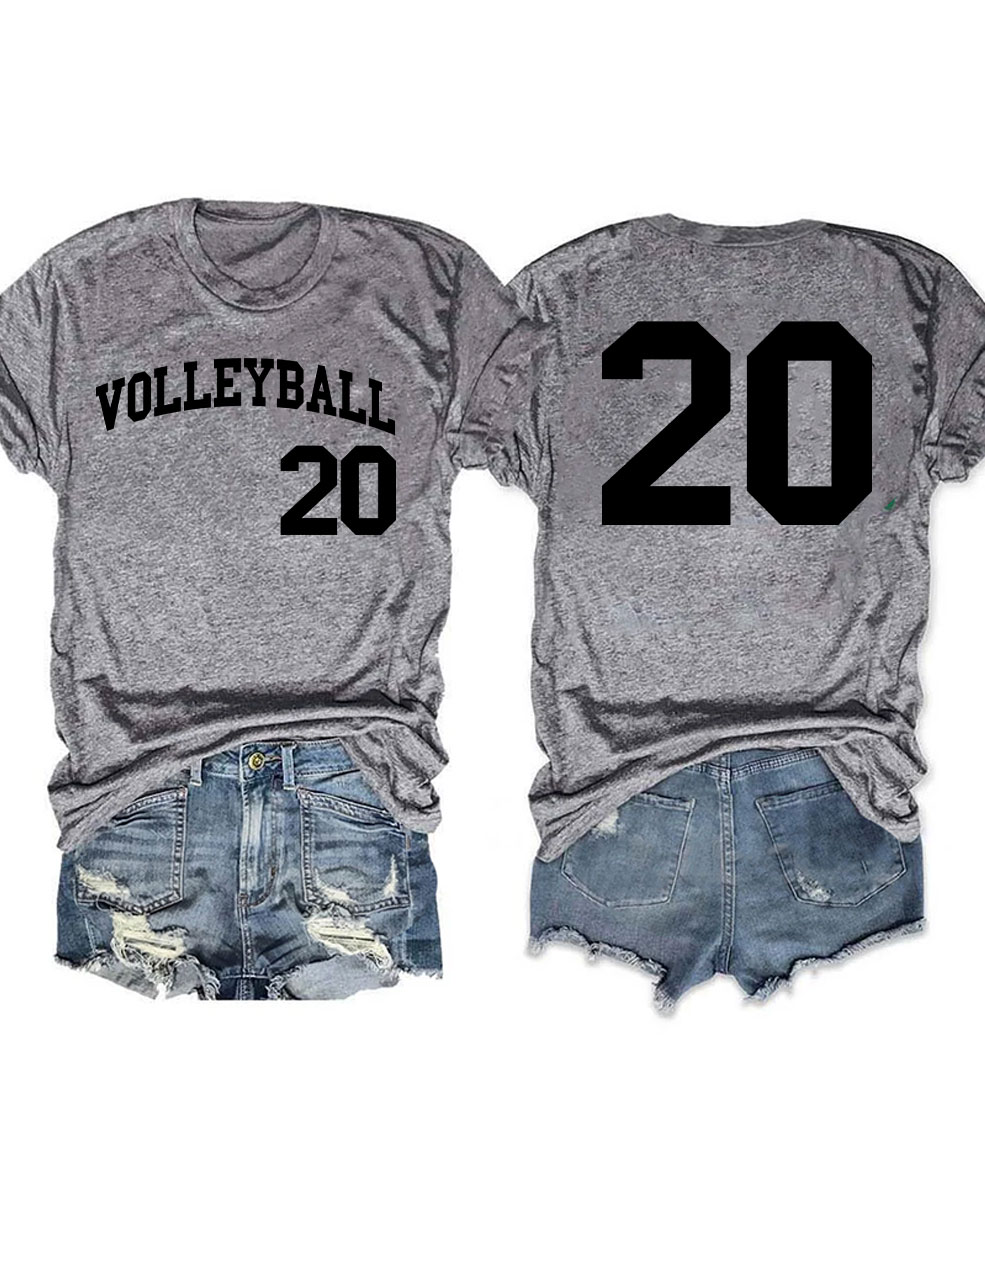 Volleyball Custom T-shirt